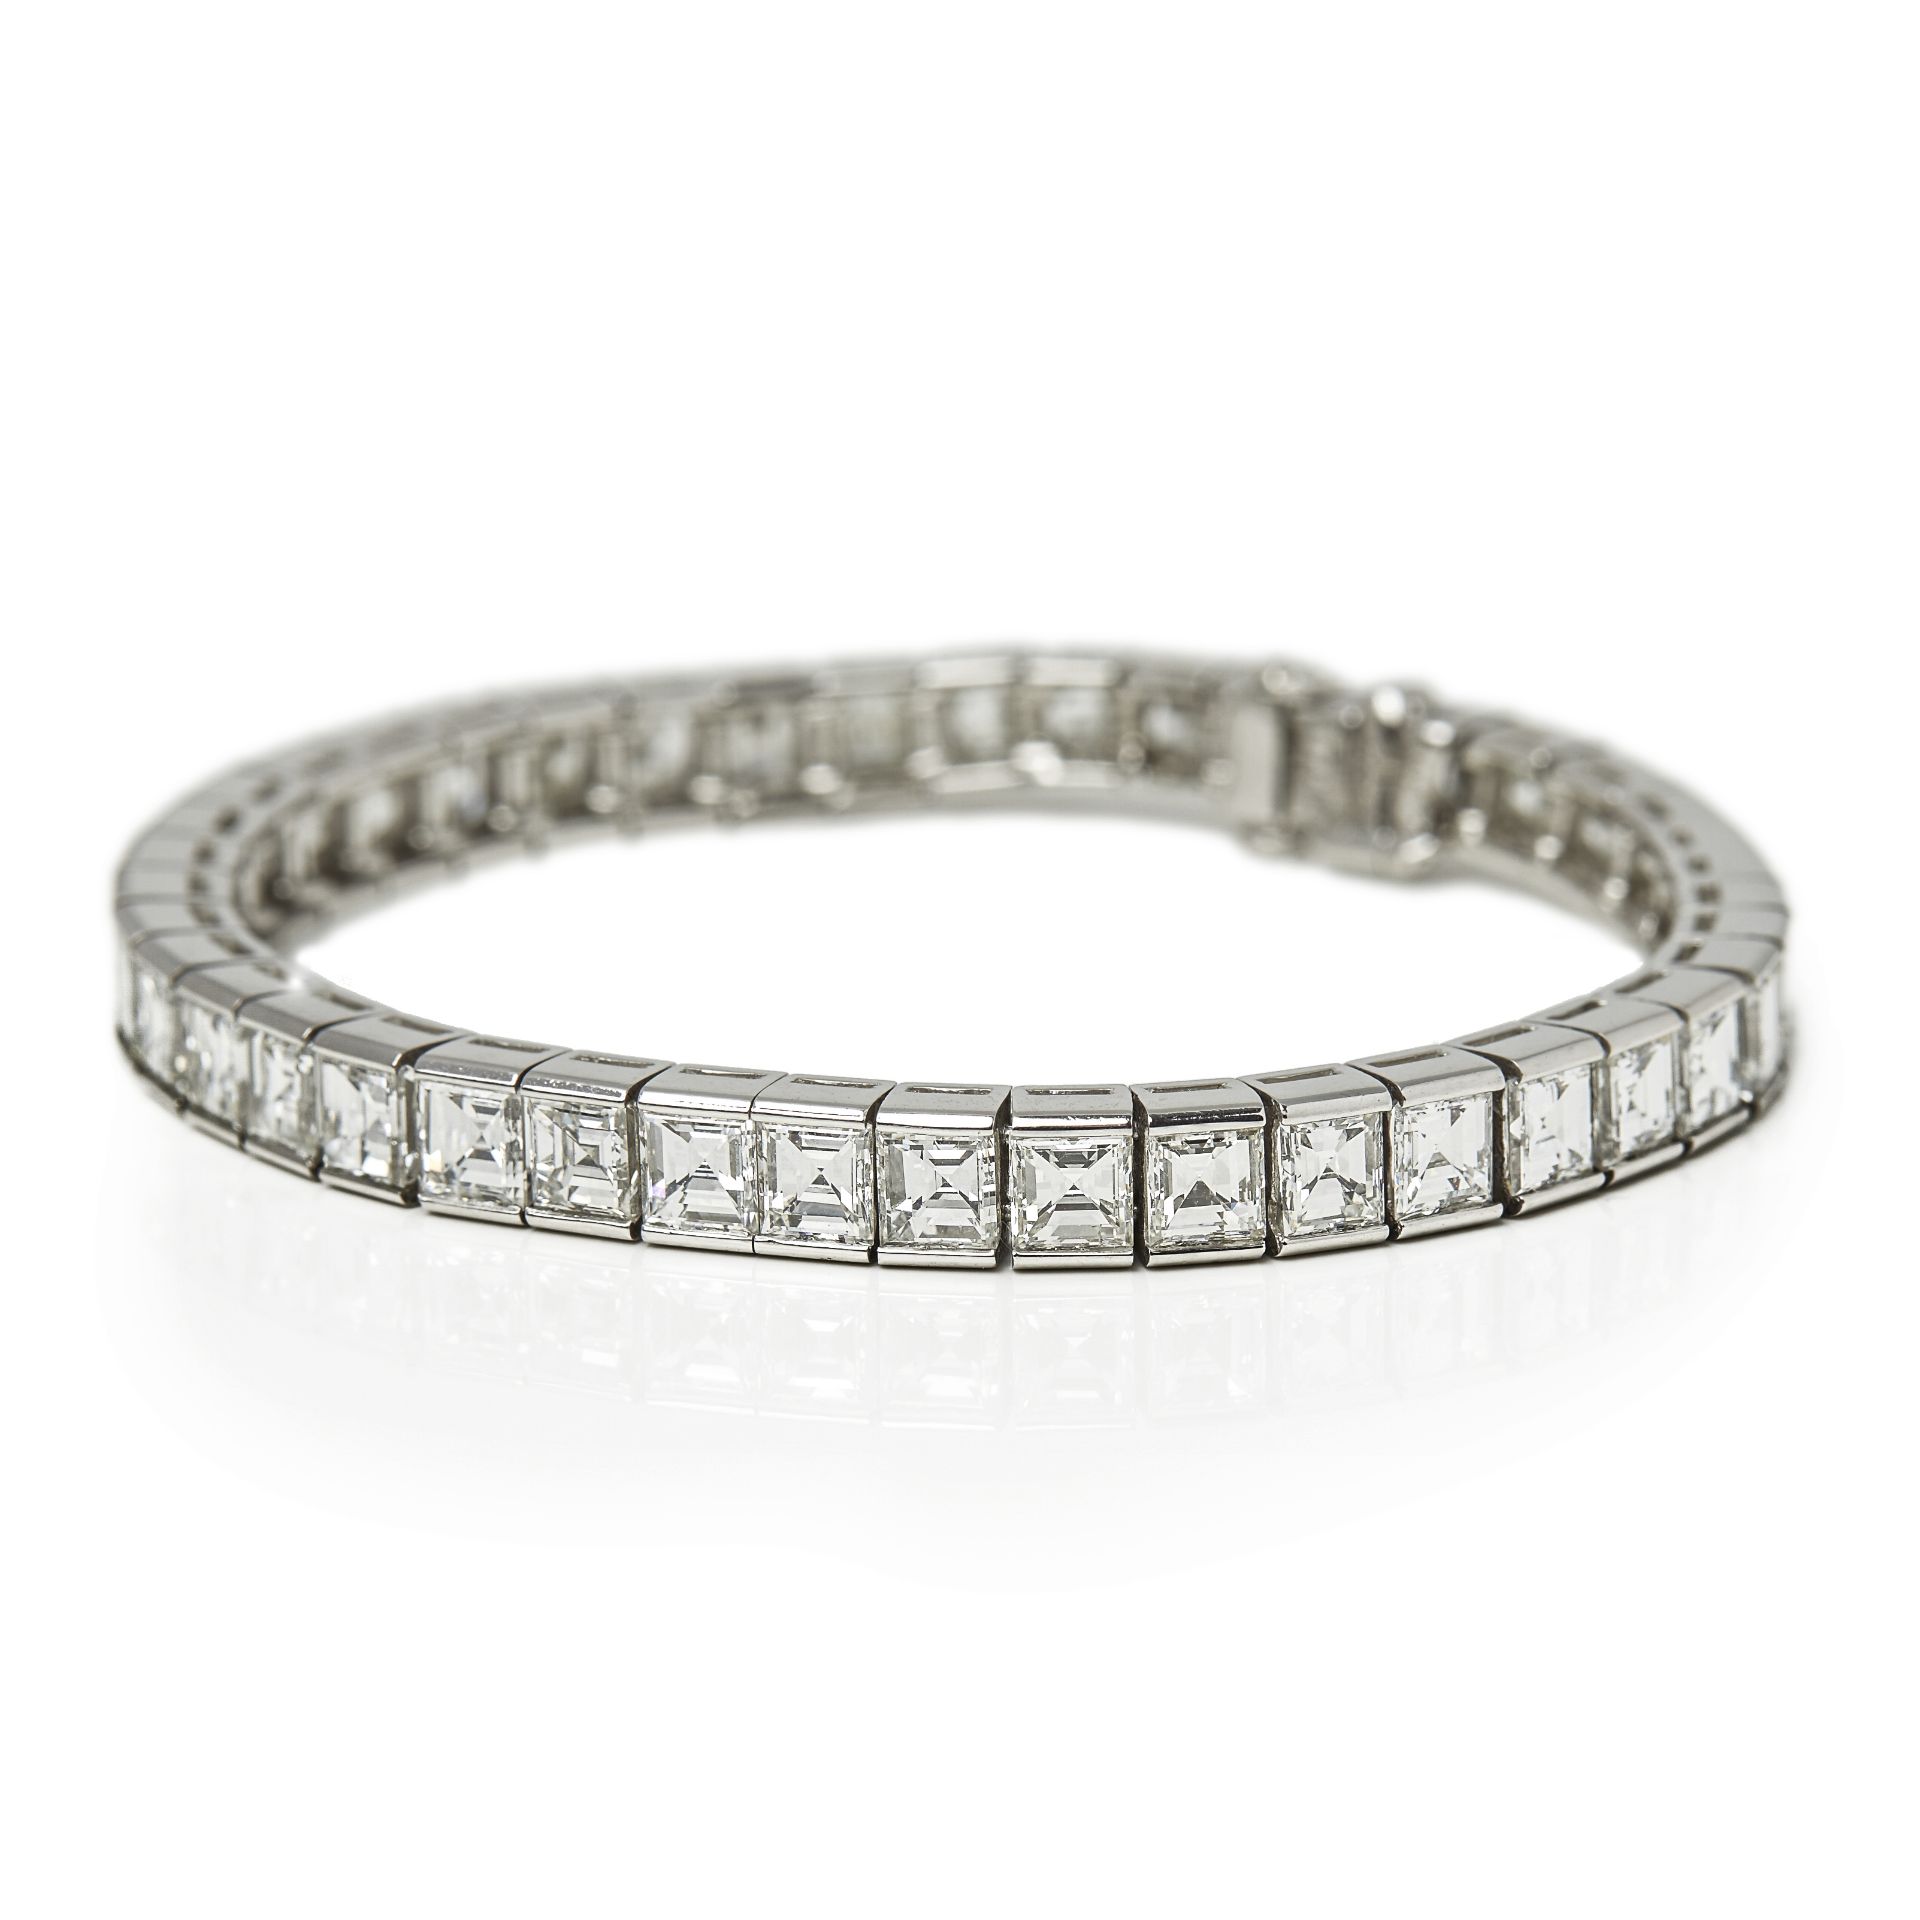 Cartier Platinum Diamond Tennis Bracelet - Image 6 of 12